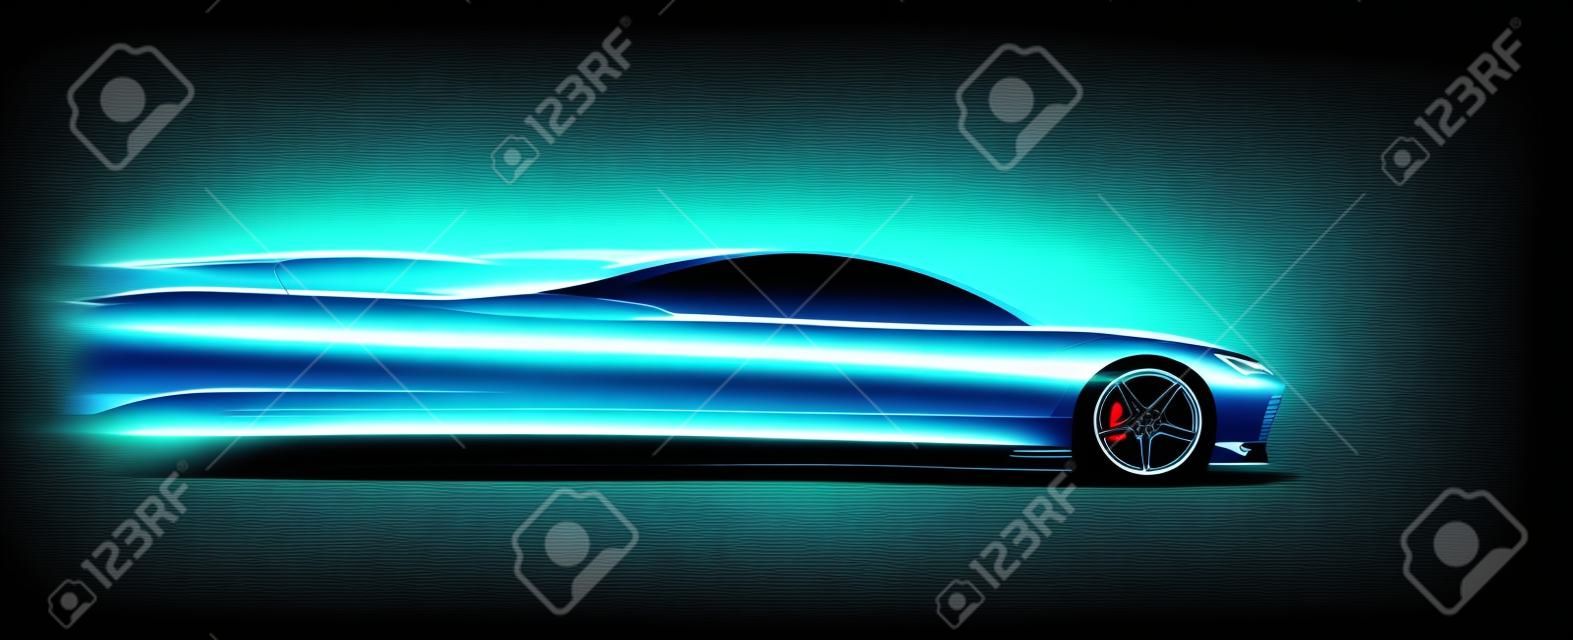 Zijaanzicht neon gloeiende sport auto silhouet. Abstract moderne stijl vector eps 10 illustratie.